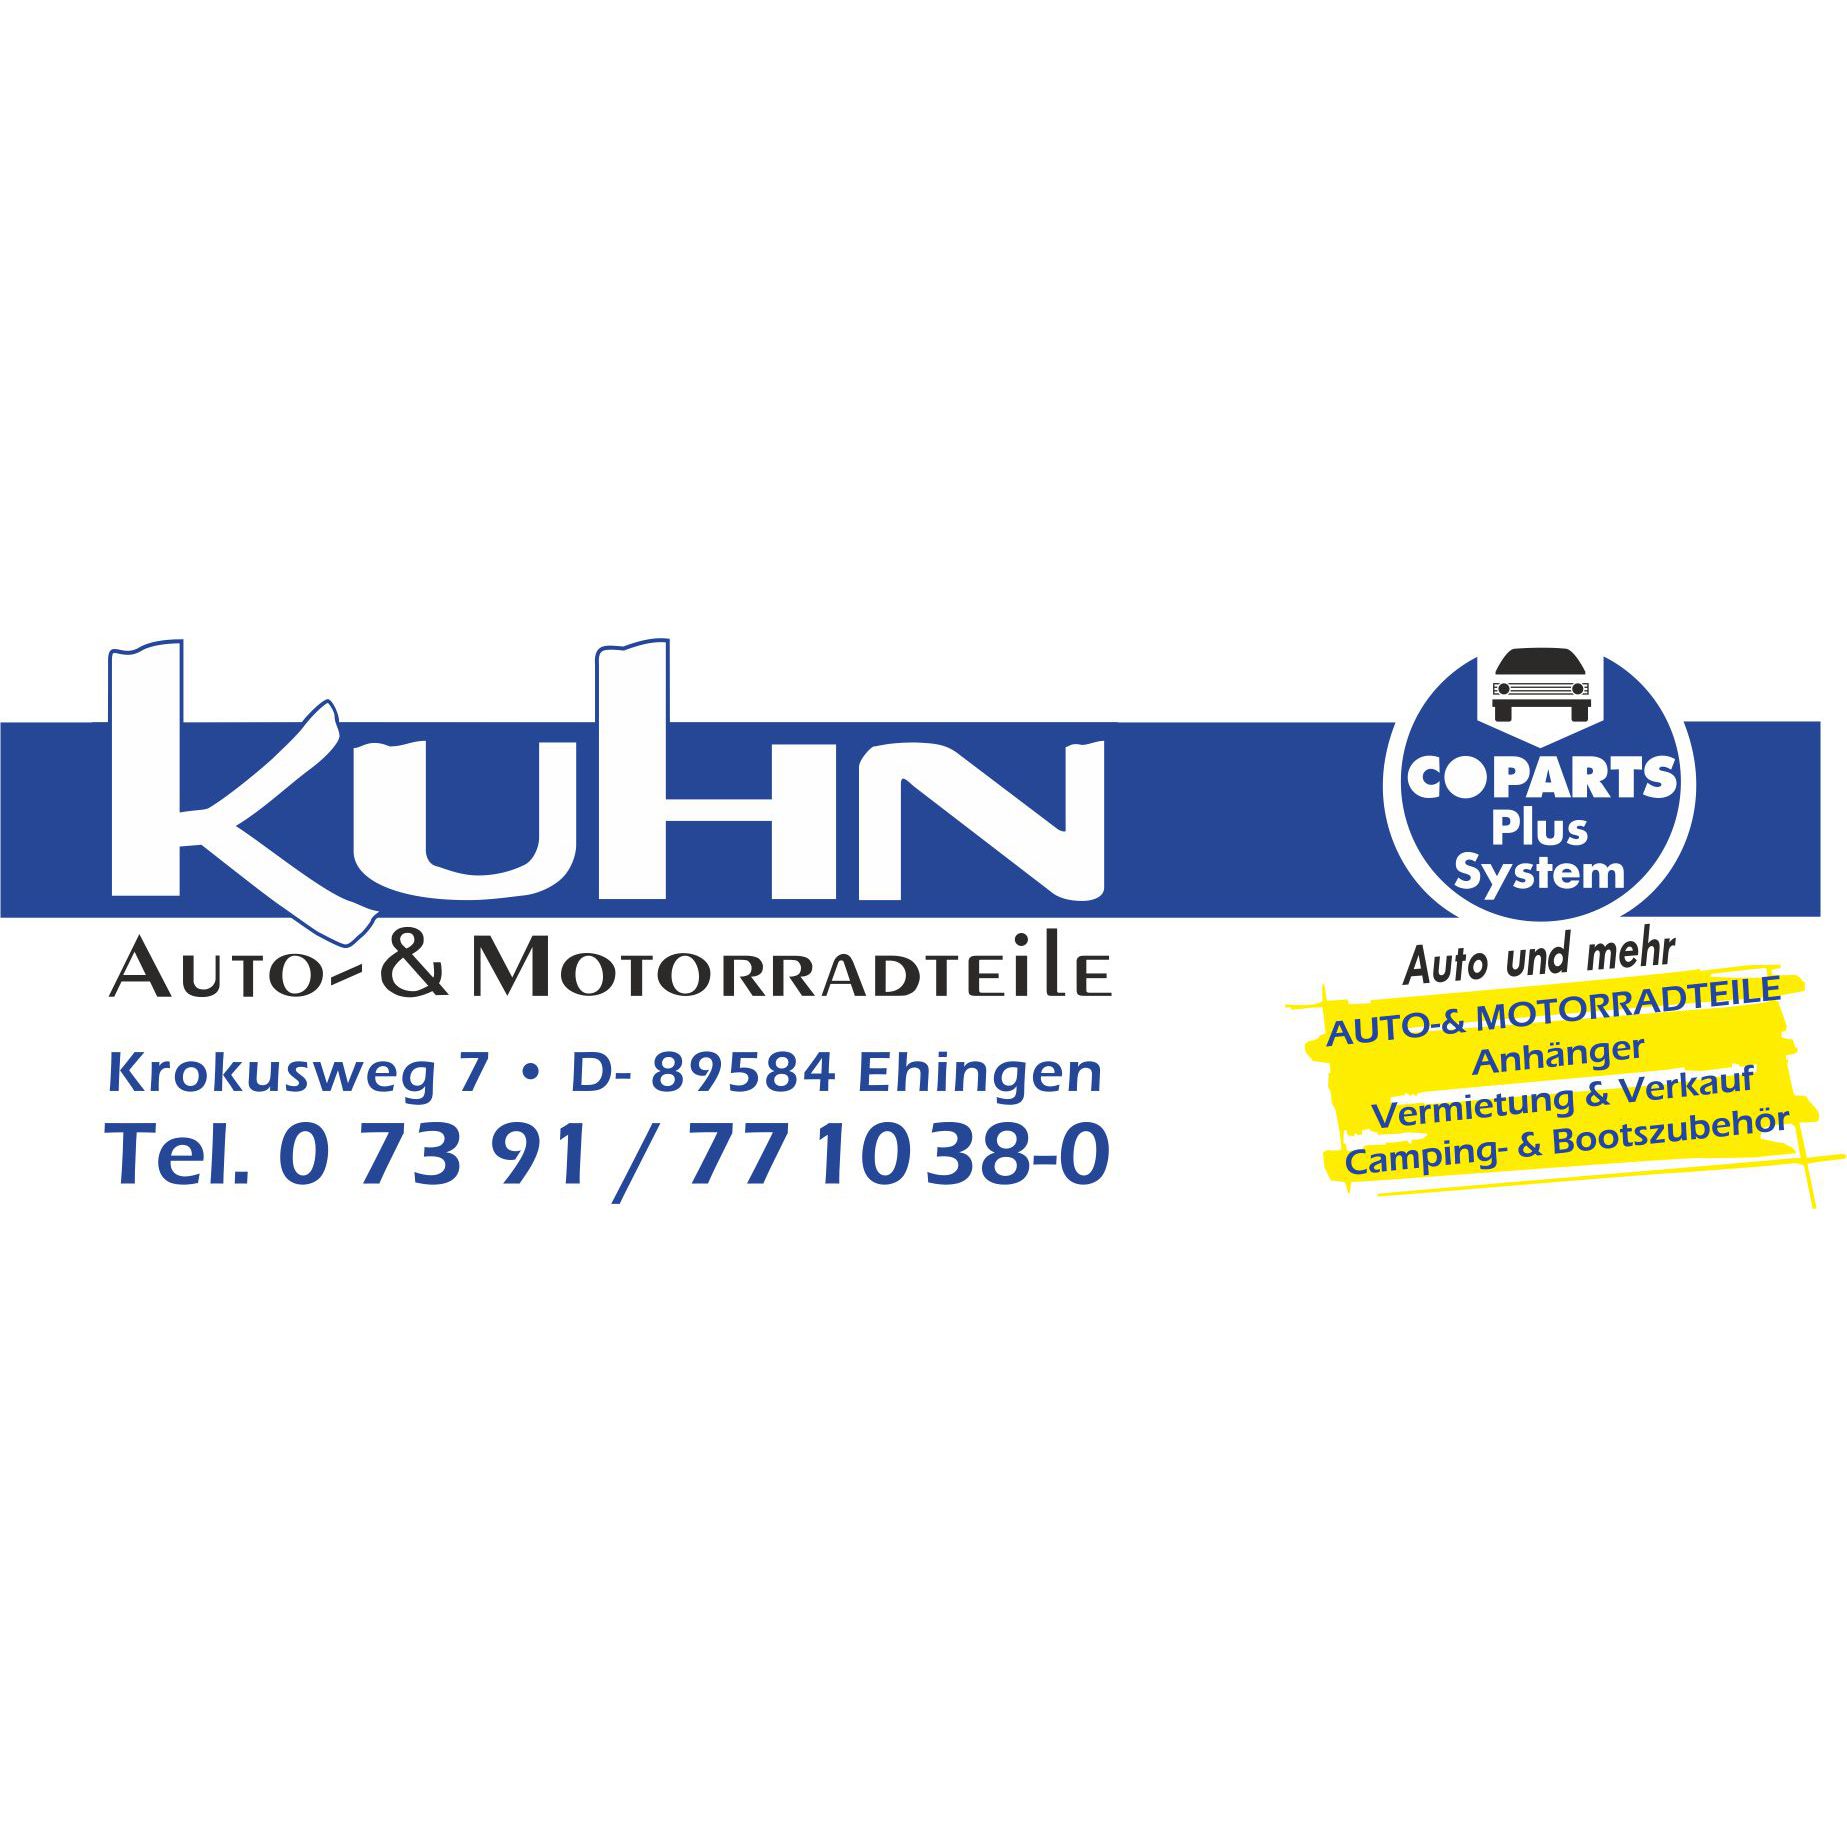 Logo Auto- & Motorradteile Kuhn